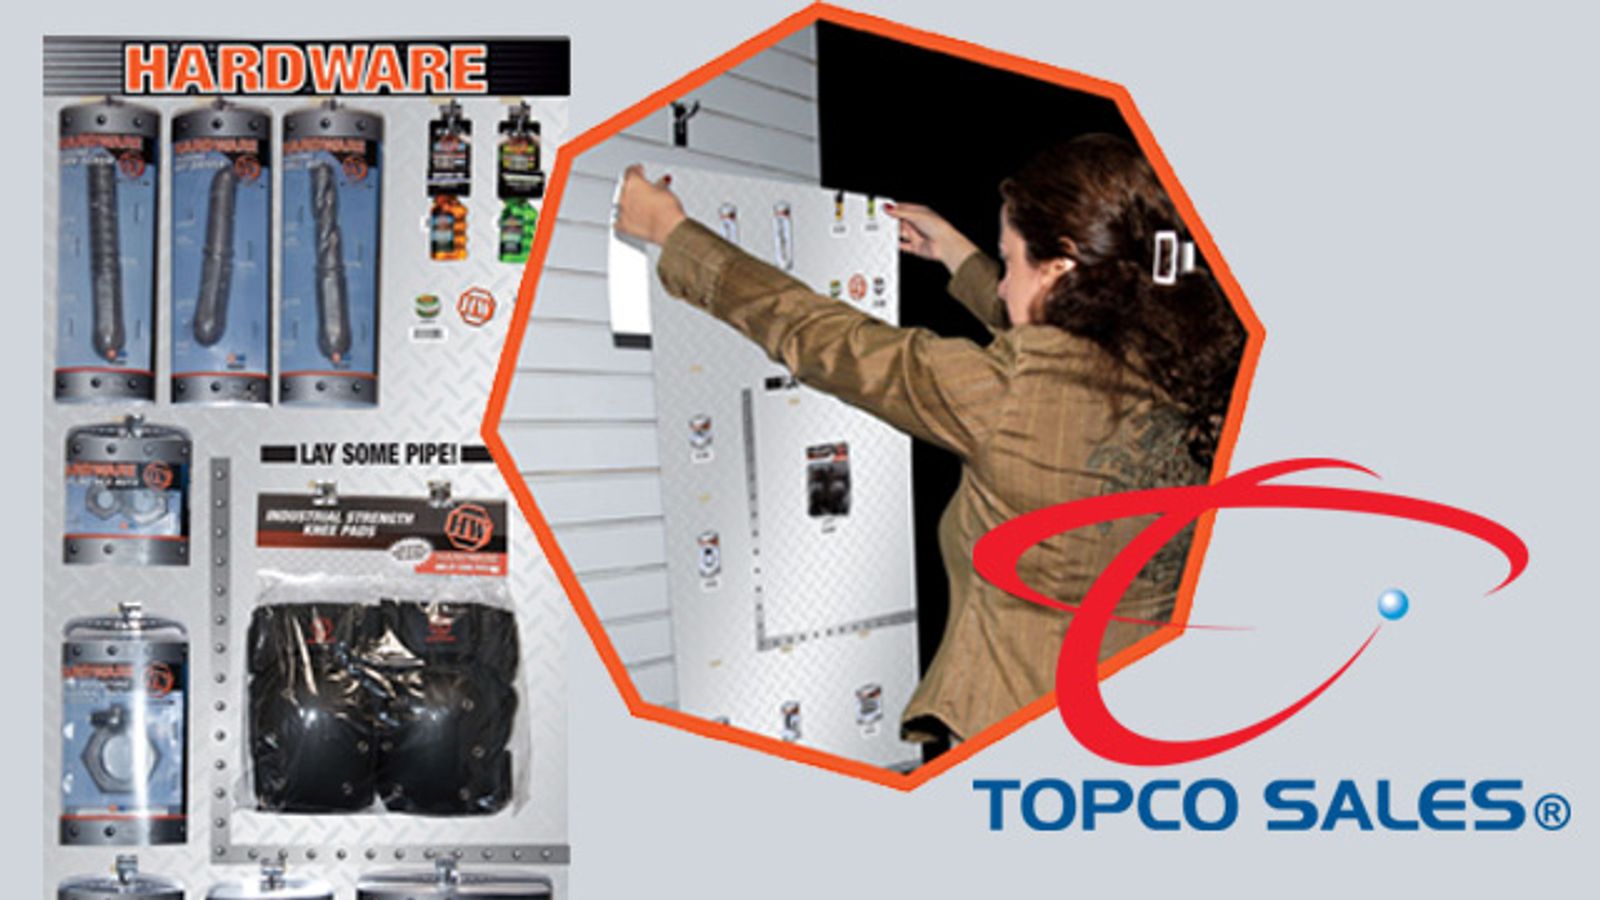 Topco Sales Releases Hardware Plan-o-Gram